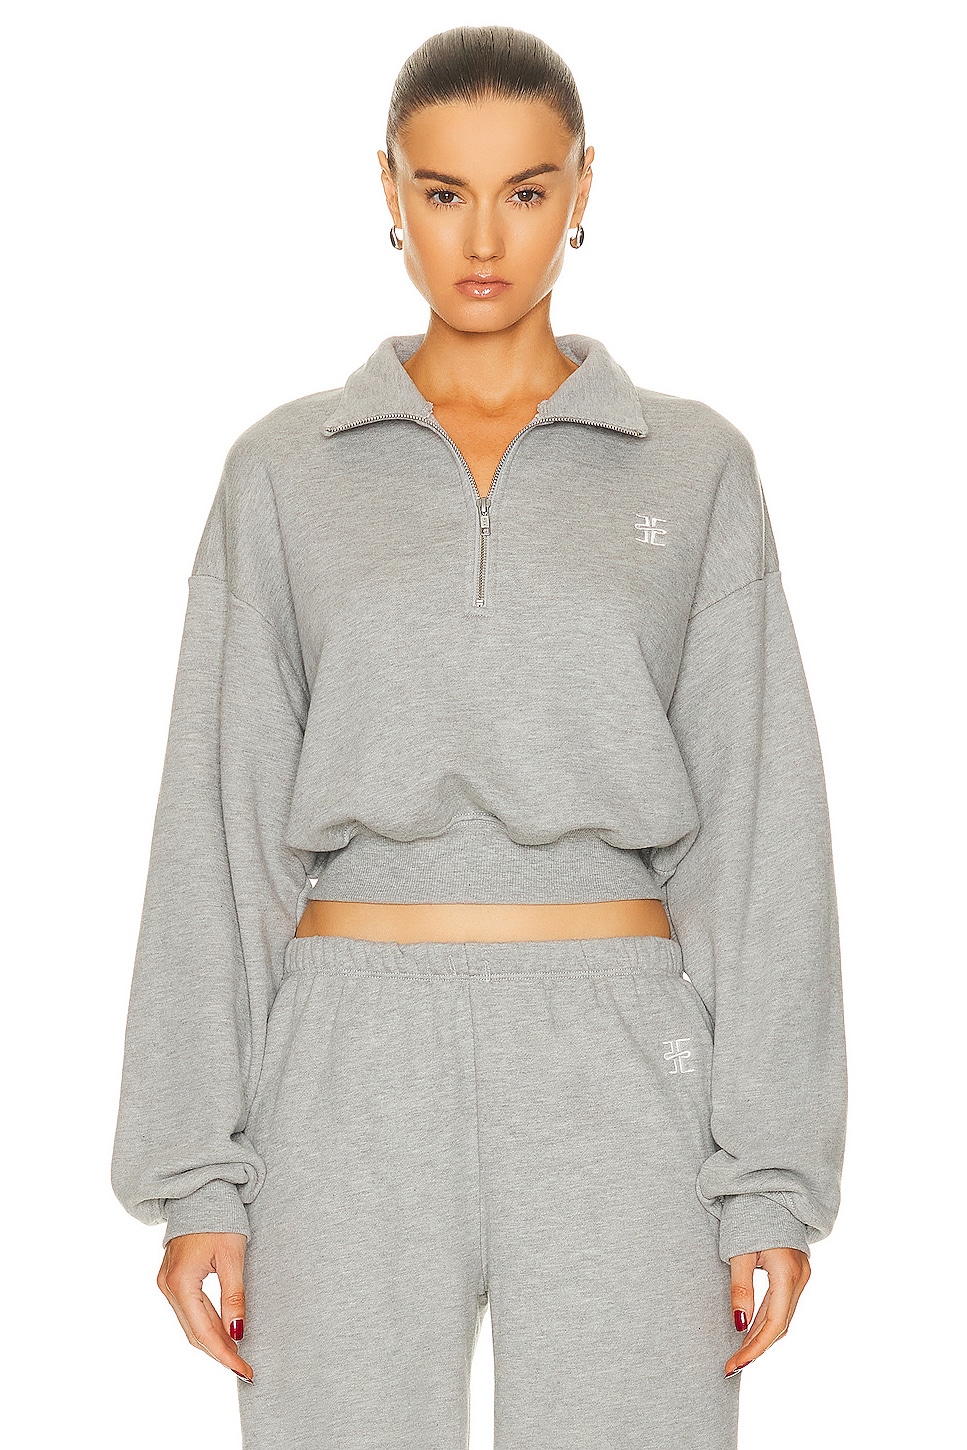 Image 1 of Eterne Cropped Half-Zip Sweatshirt in Heather Grey